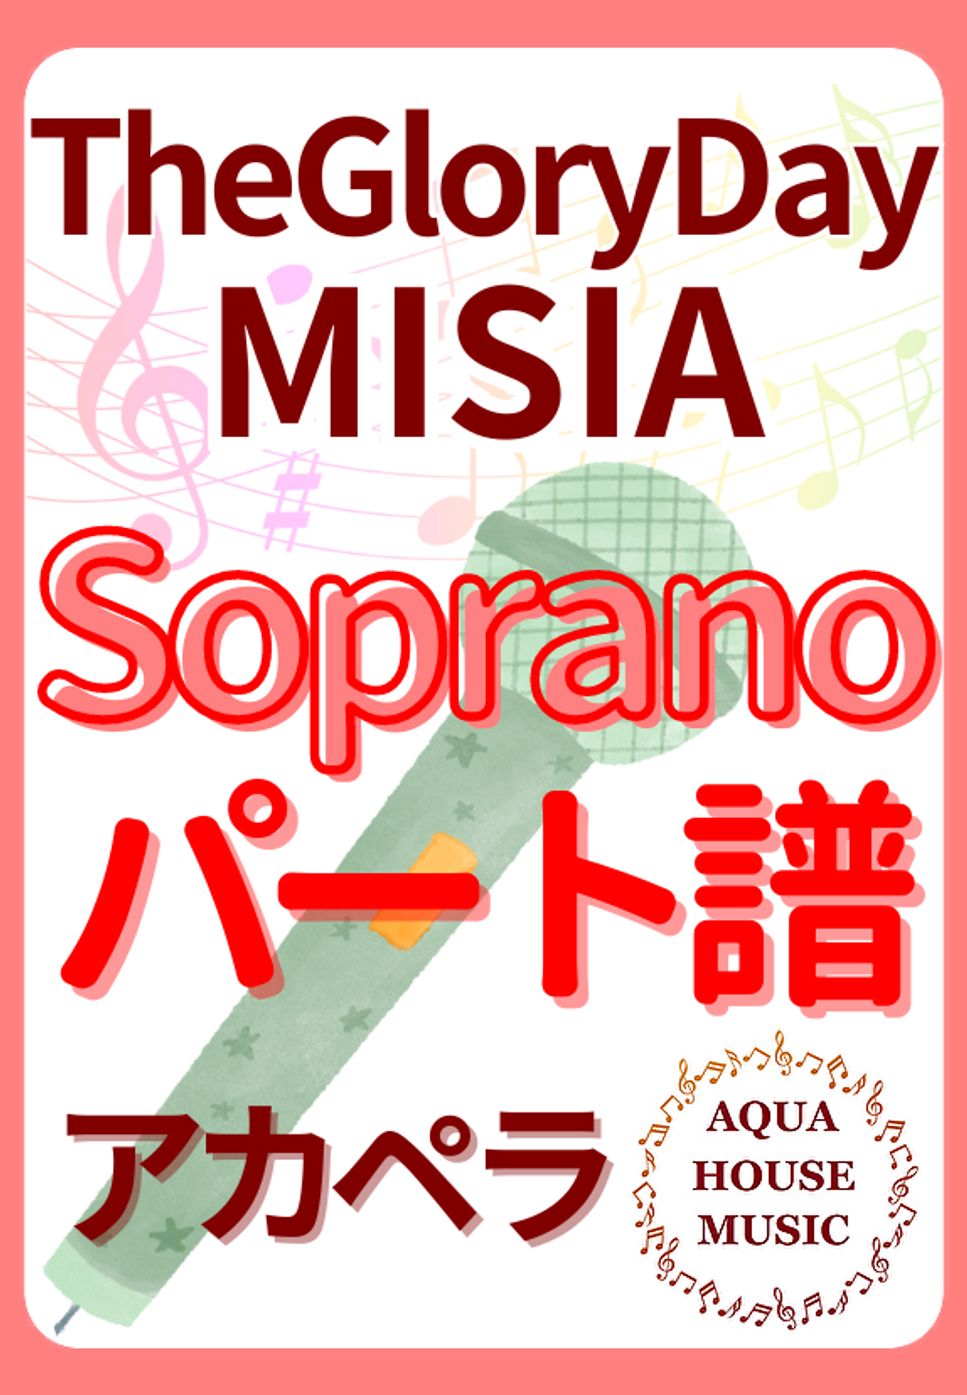 MISIA - The Glory Day (アカペラ楽譜♪Sopranoパート譜) by 飯田 亜紗子